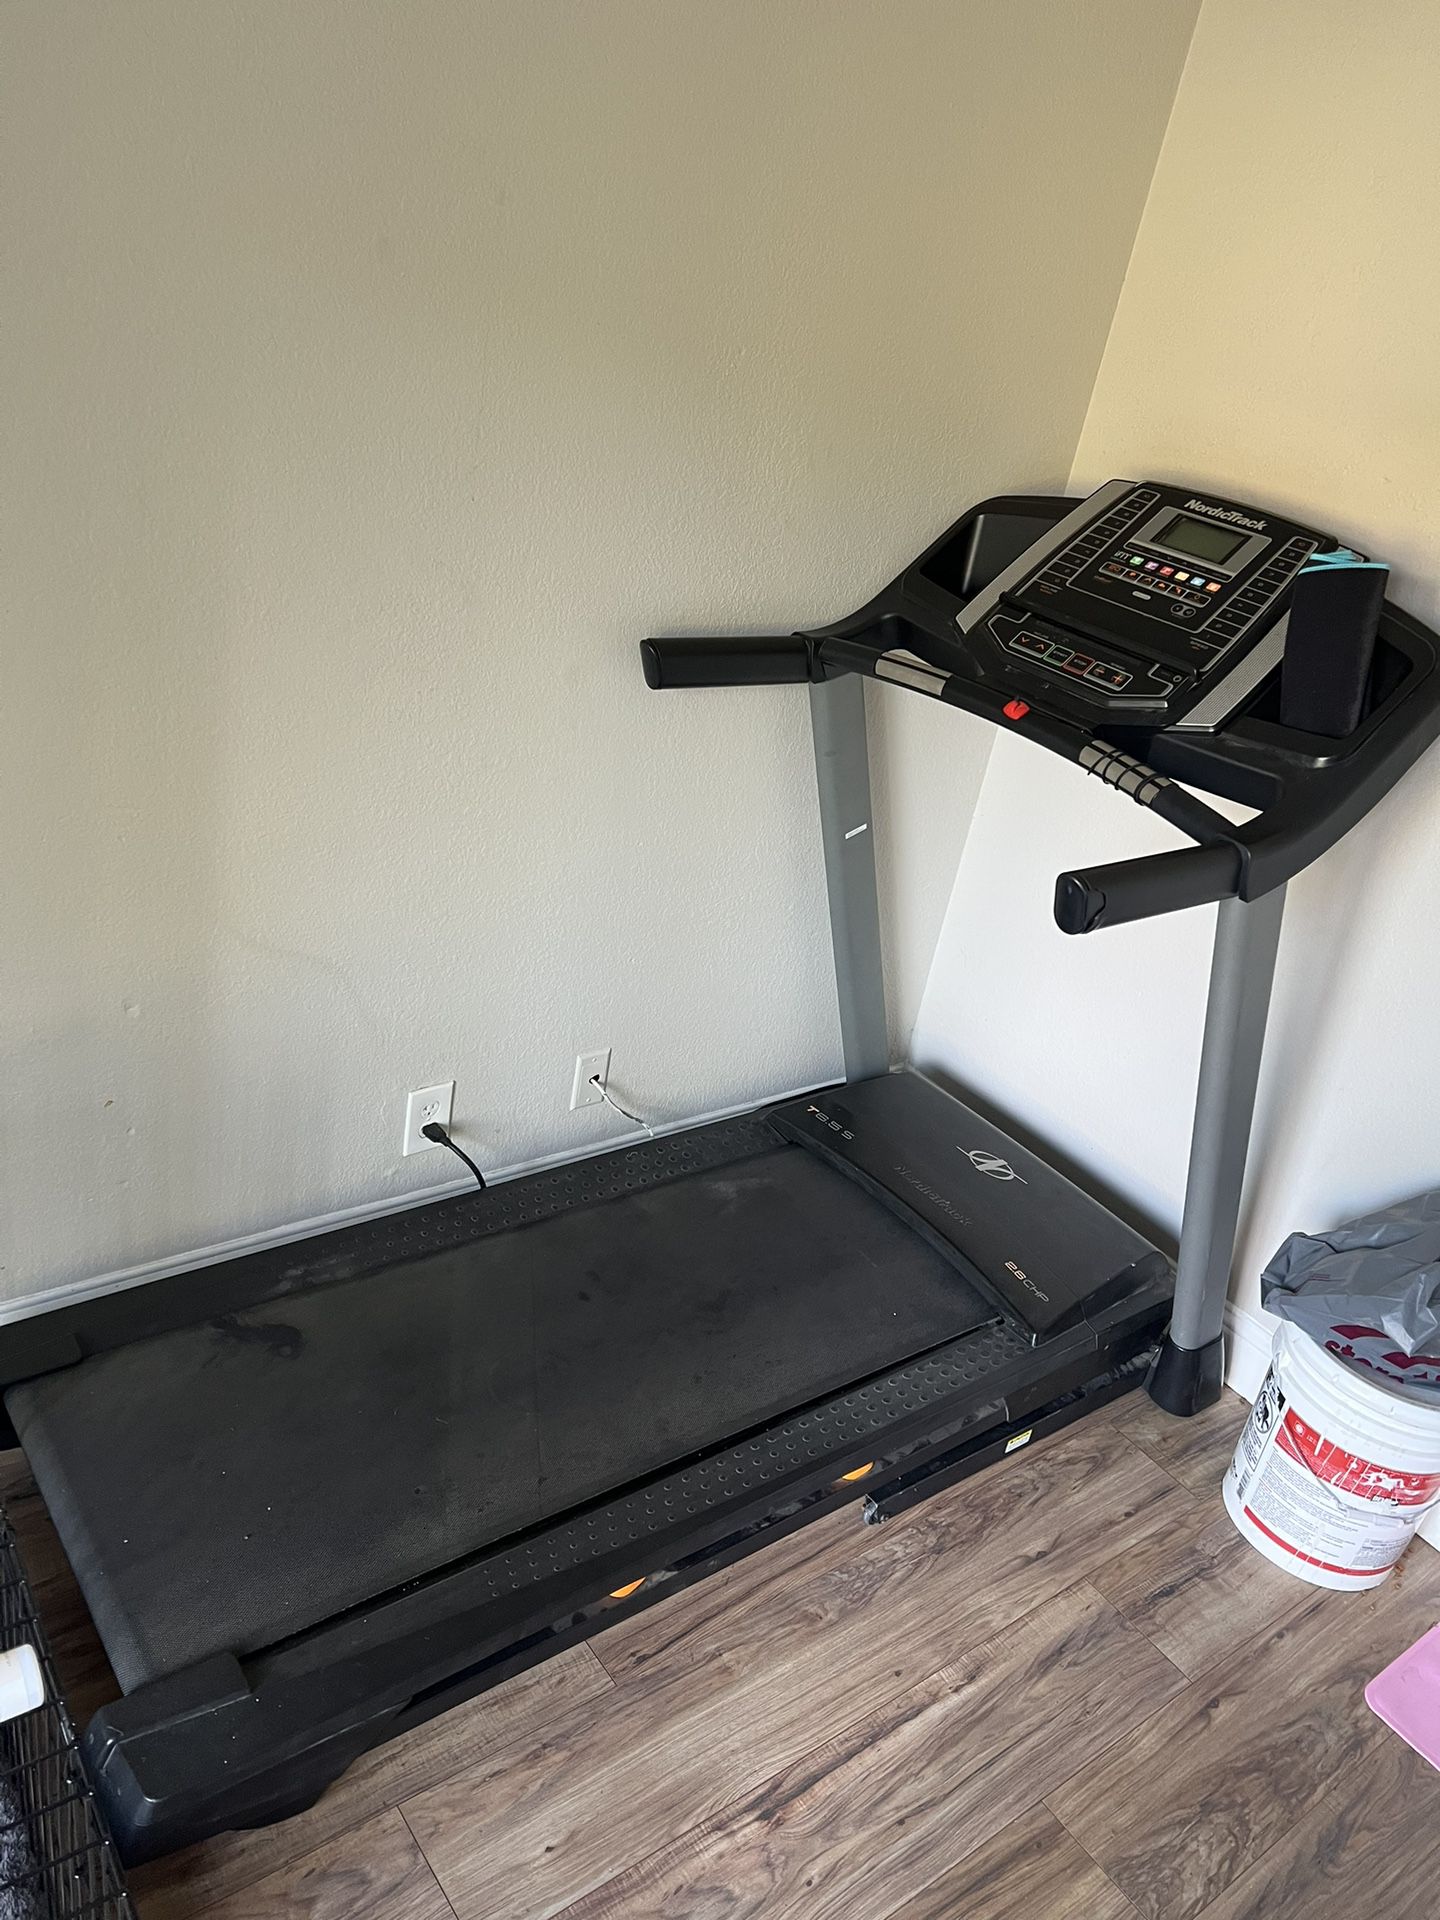 NordicTrack treadmill 